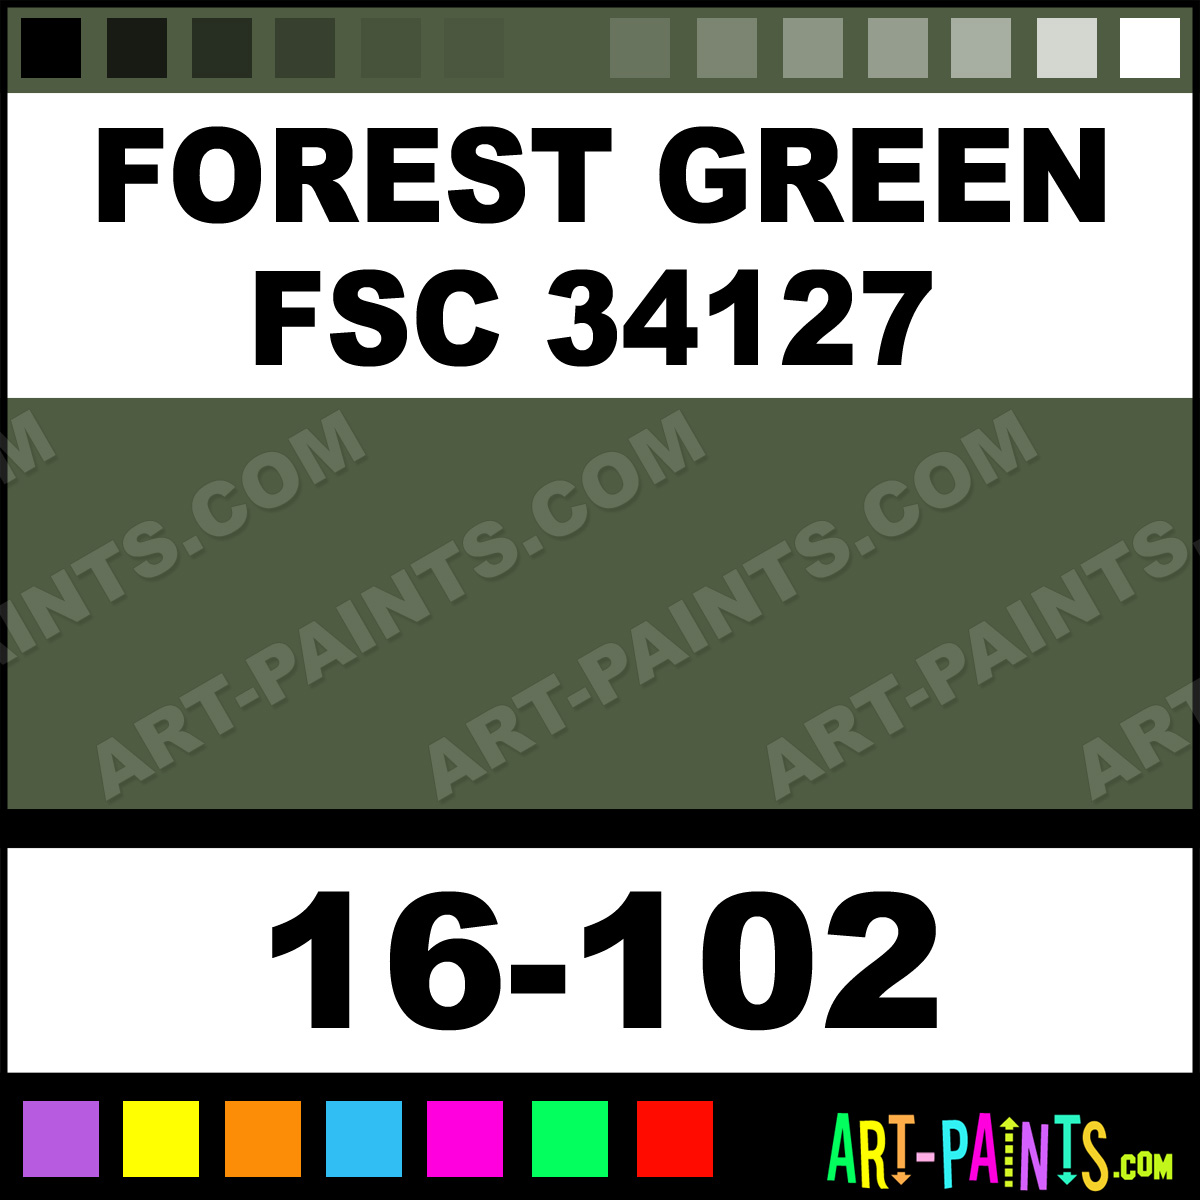 Forest-Green-FSC-34127-lg.jpg